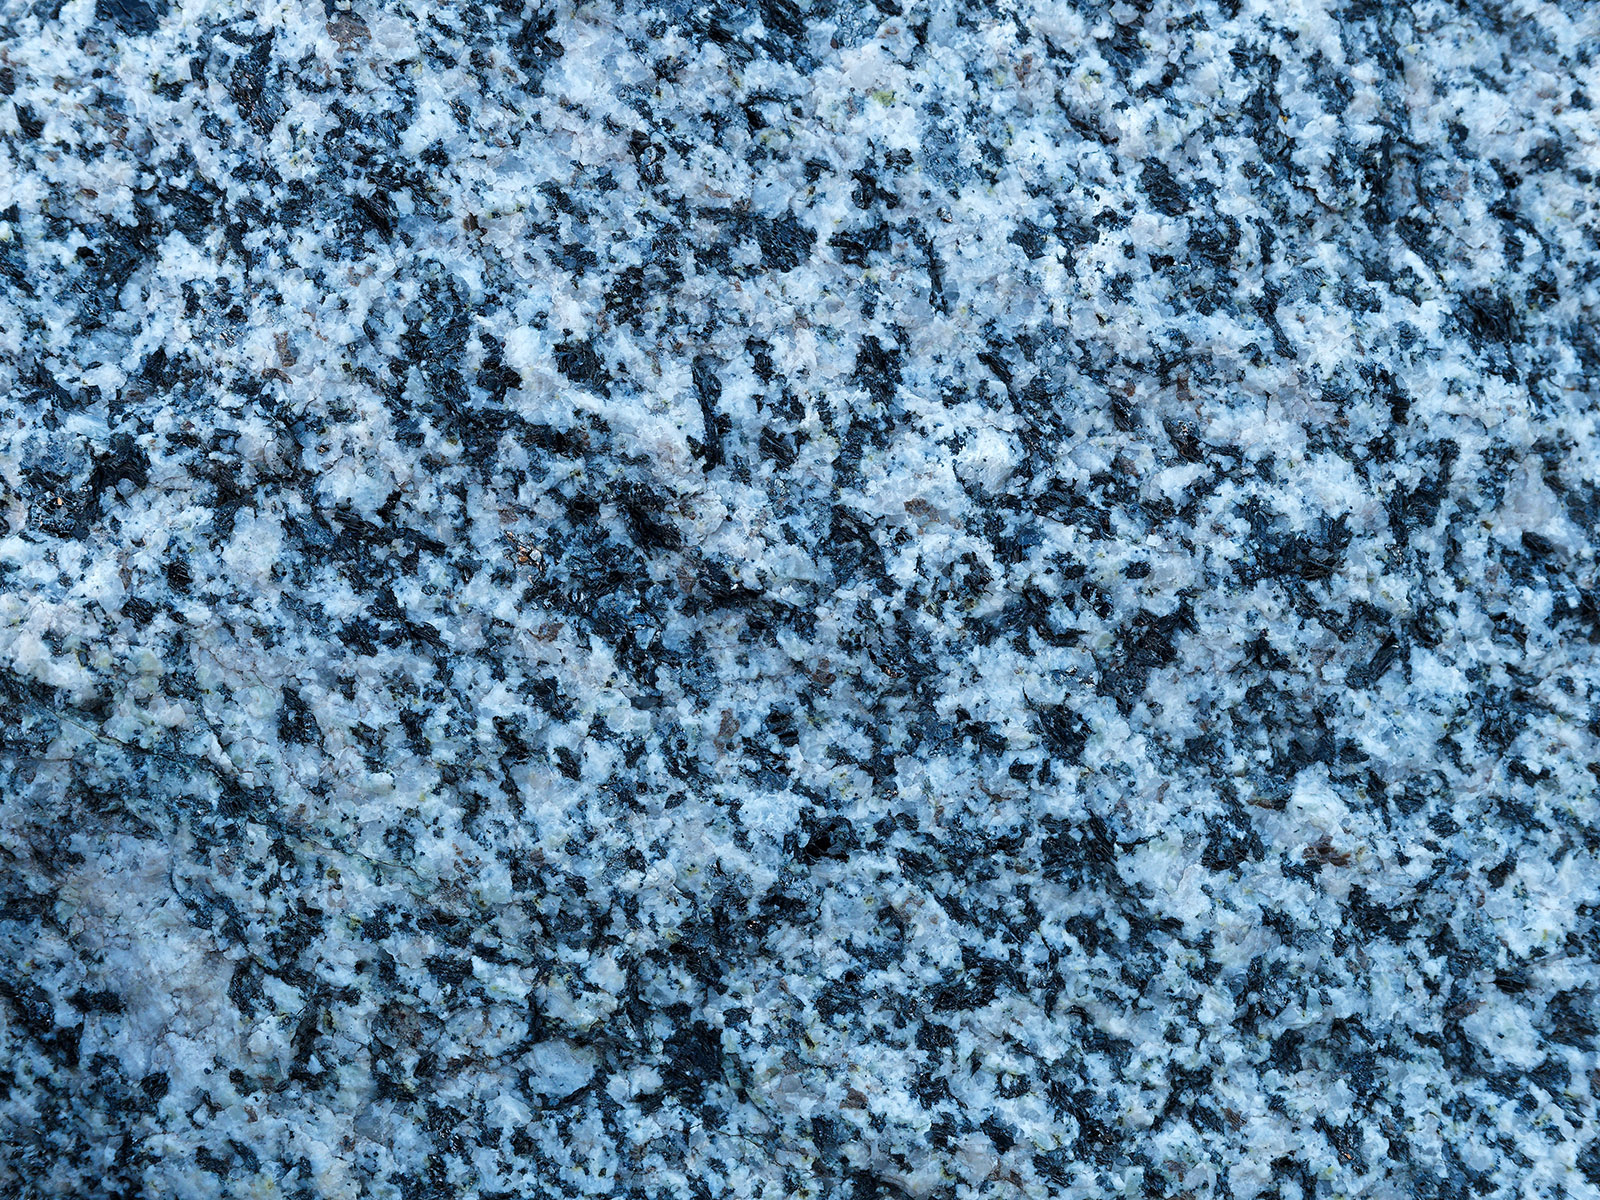 Precambrian granite at Independence Pass.